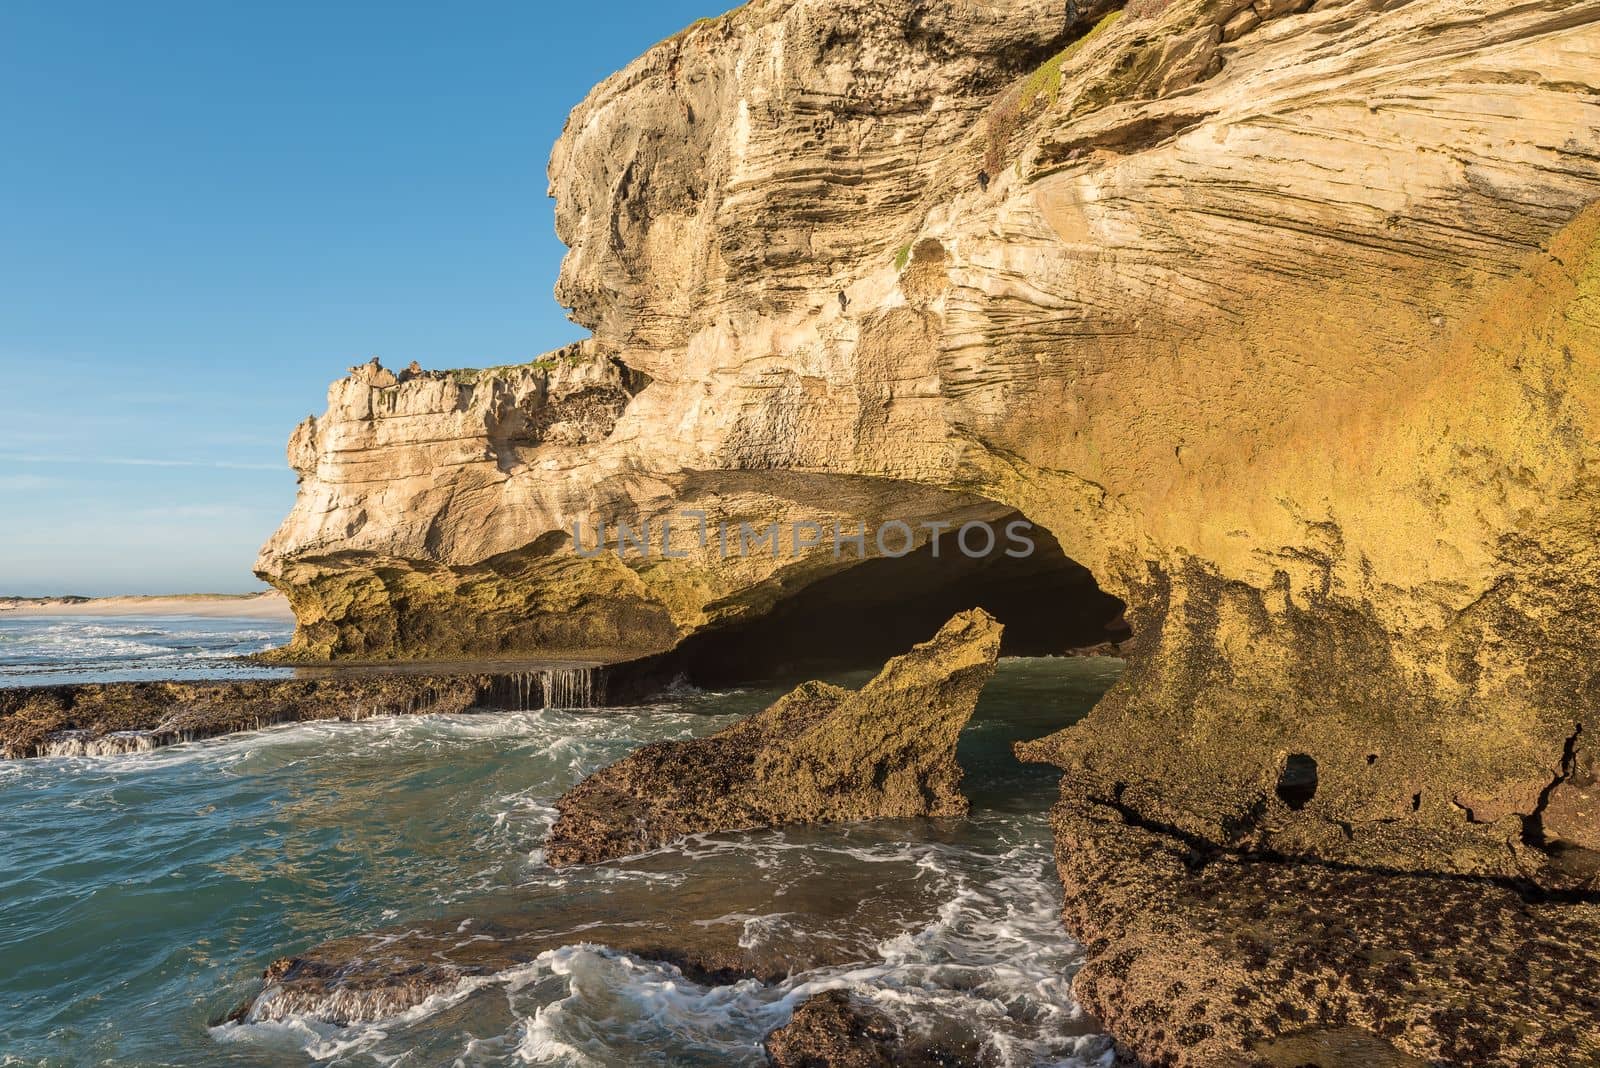 Ocean-side mouth of the Waenhuiskrans Cave near Arniston by dpreezg